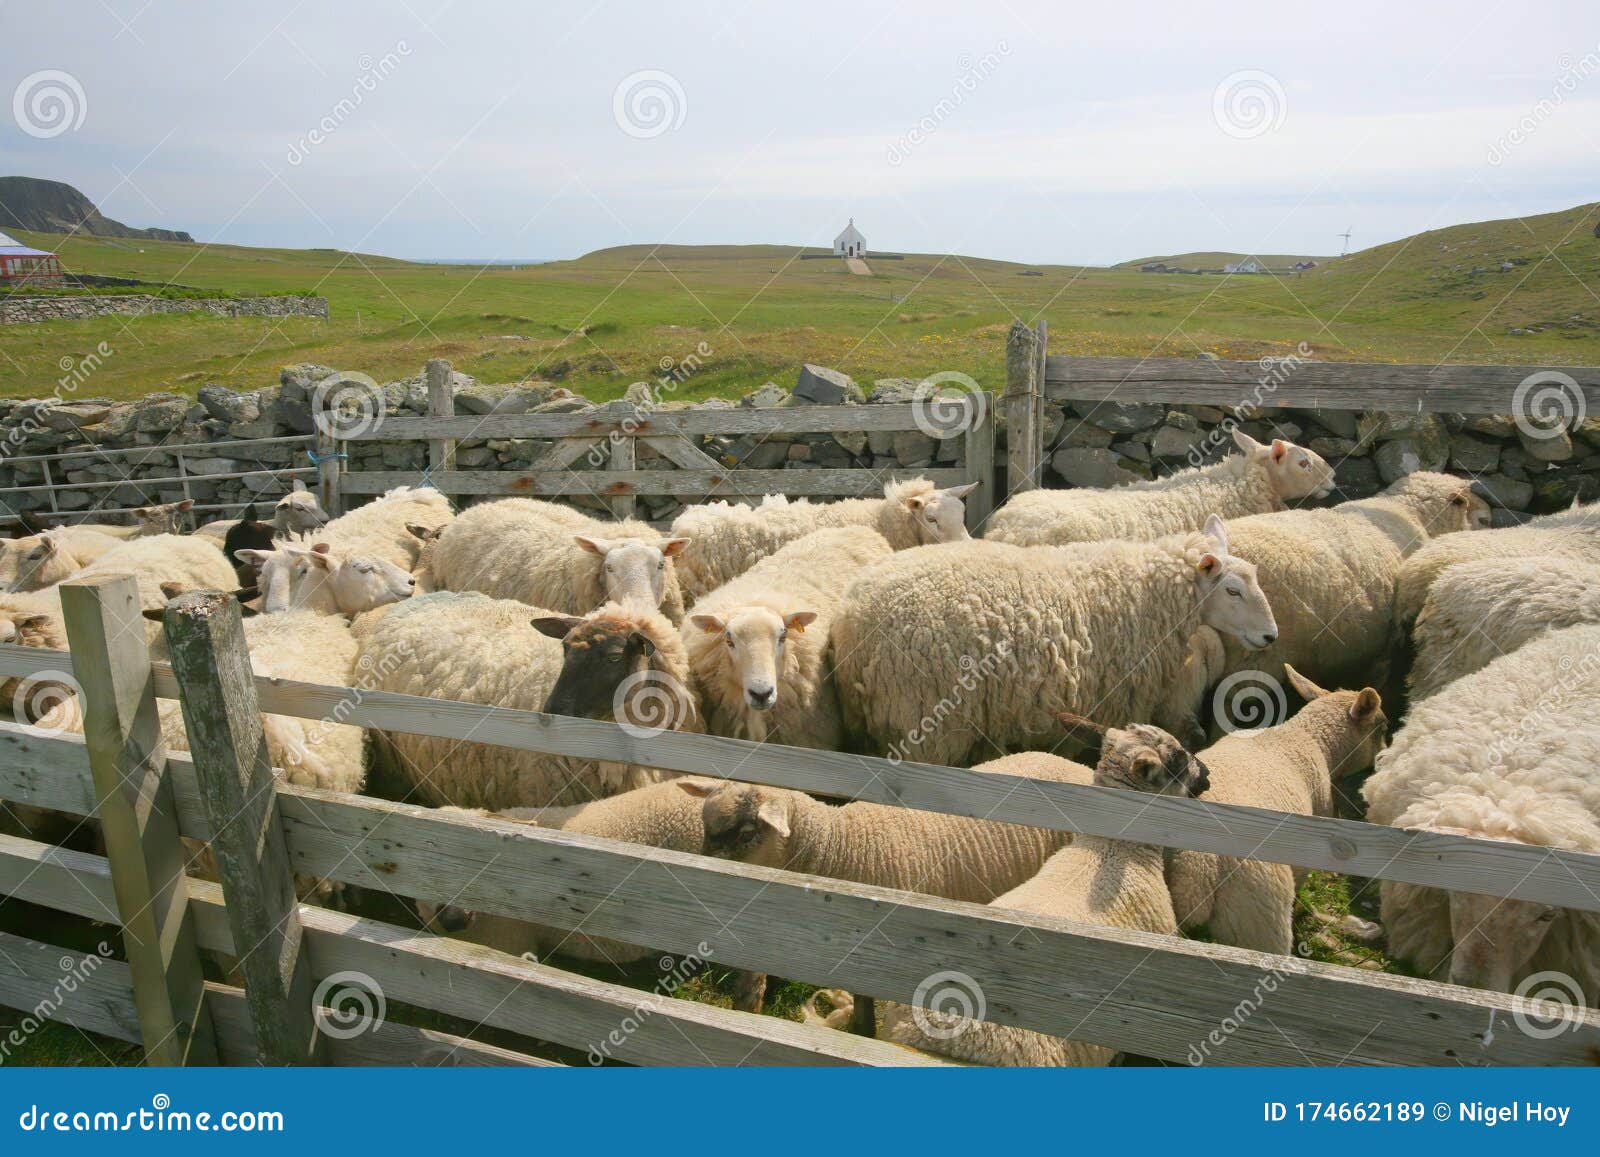 bevroren Tegenstrijdigheid oorsprong Sheep Being Held in a Sheep Pen Stock Image - Image of shetland, farming:  174662189